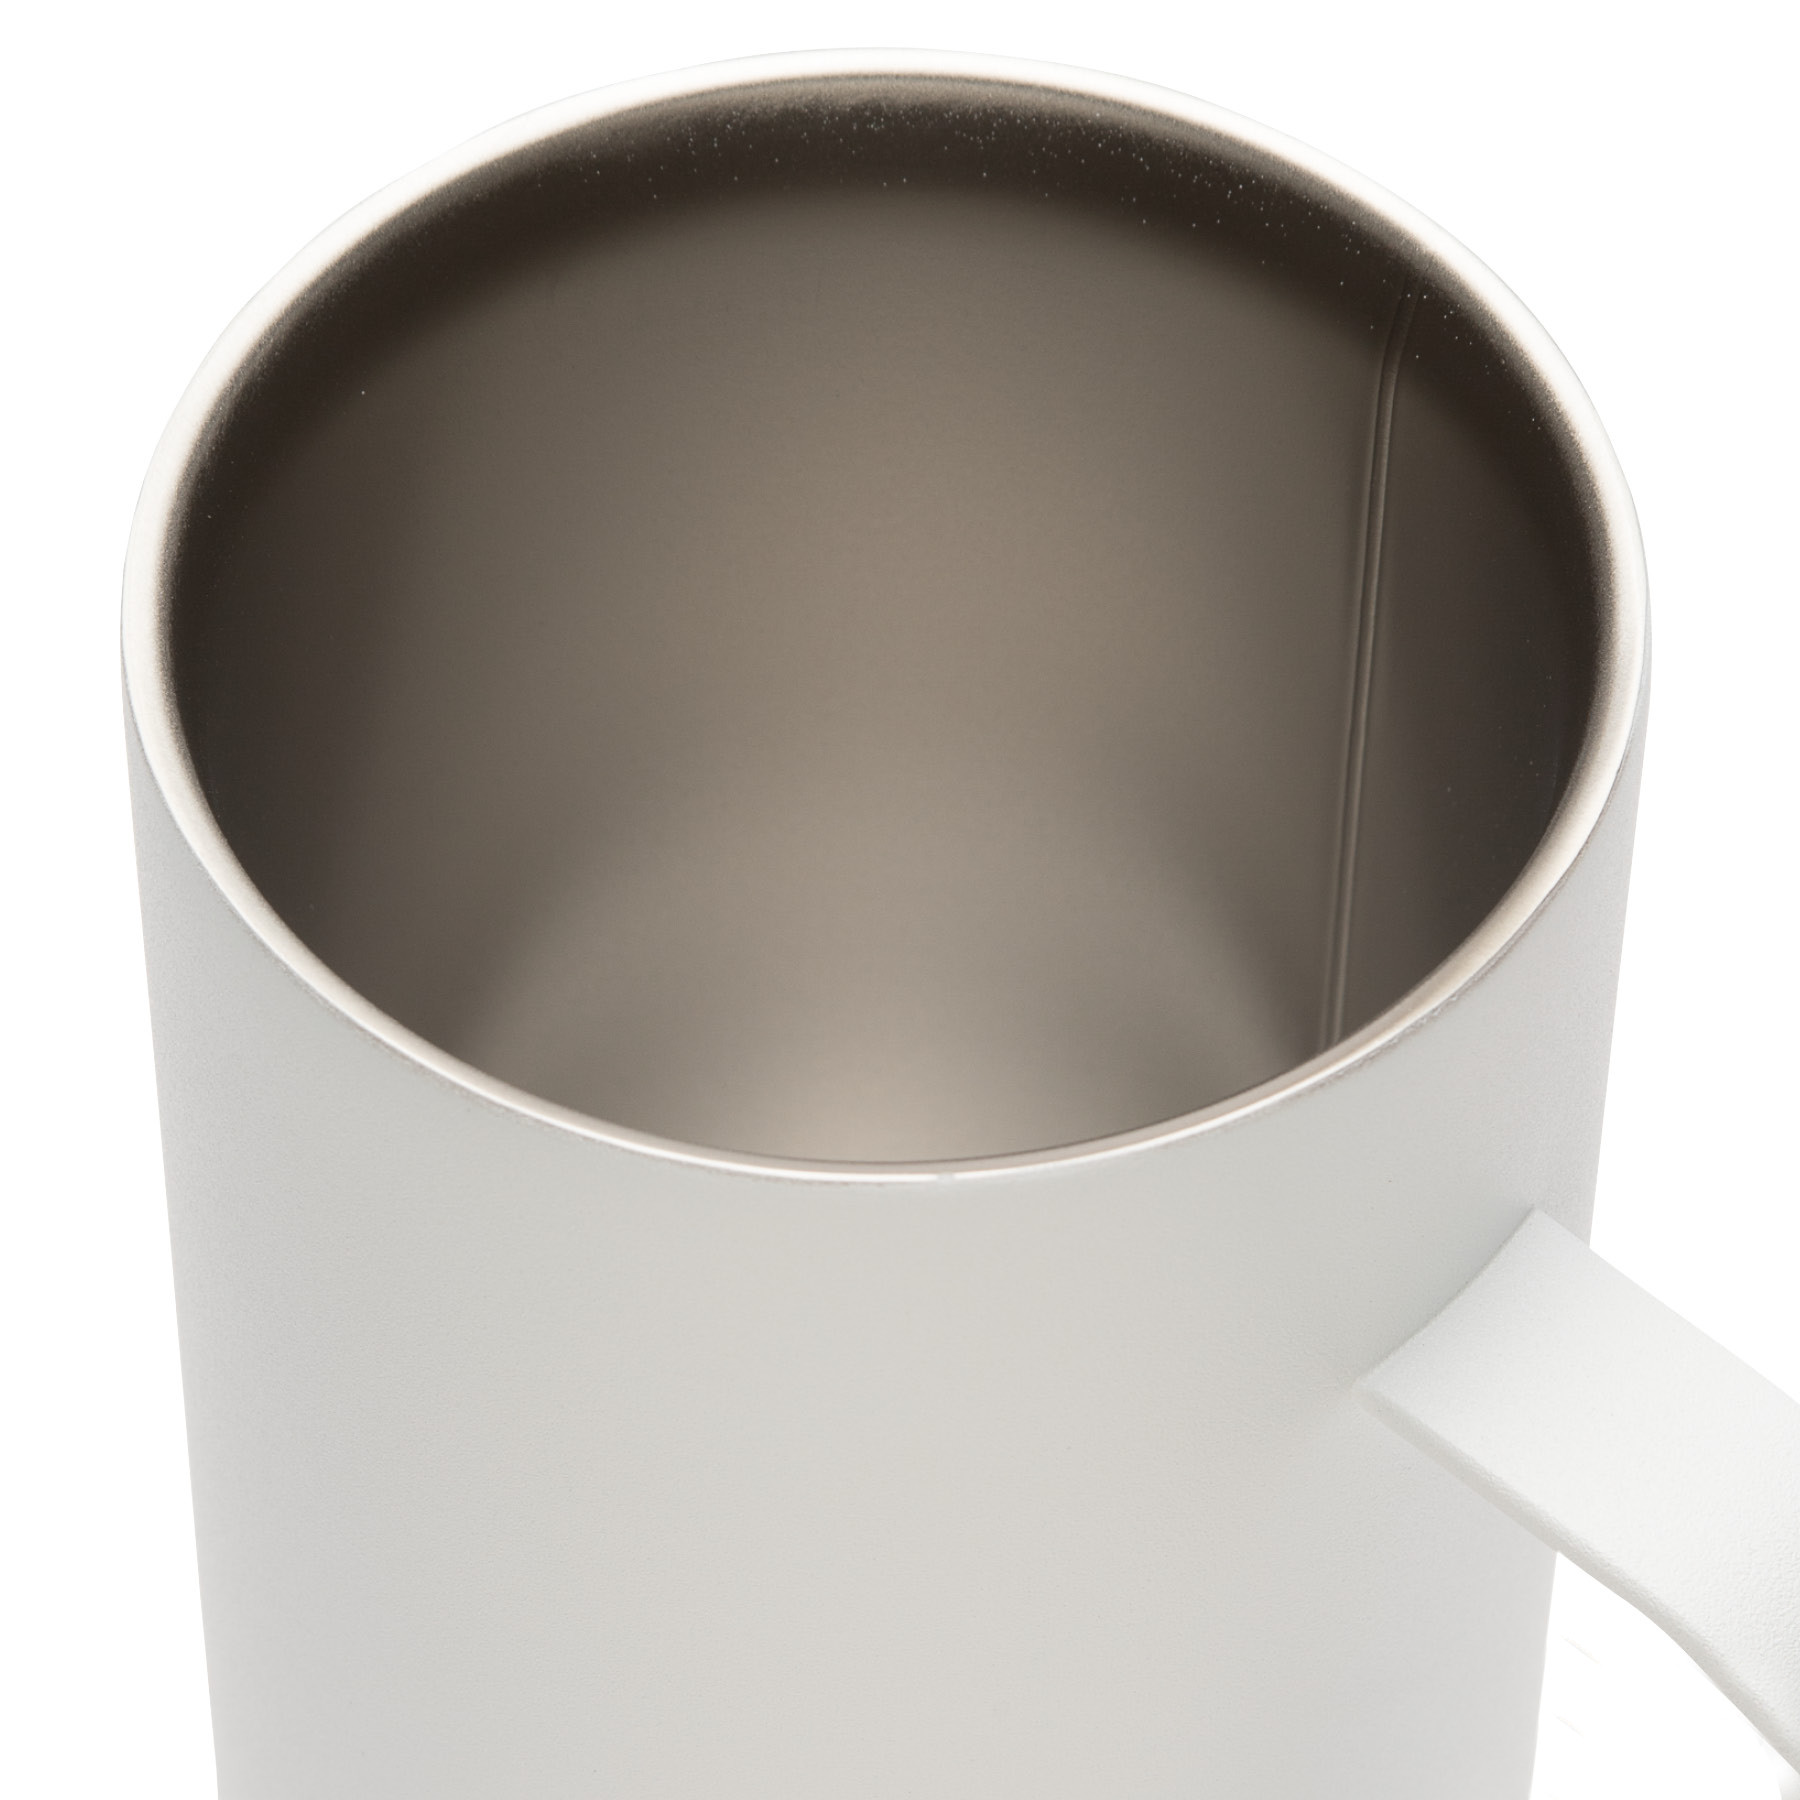 https://www.hansonellis.com/mm5/graphics/00000001/3/engraved-vacuum-seal-double-wall-stainless-steel-mug.jpg